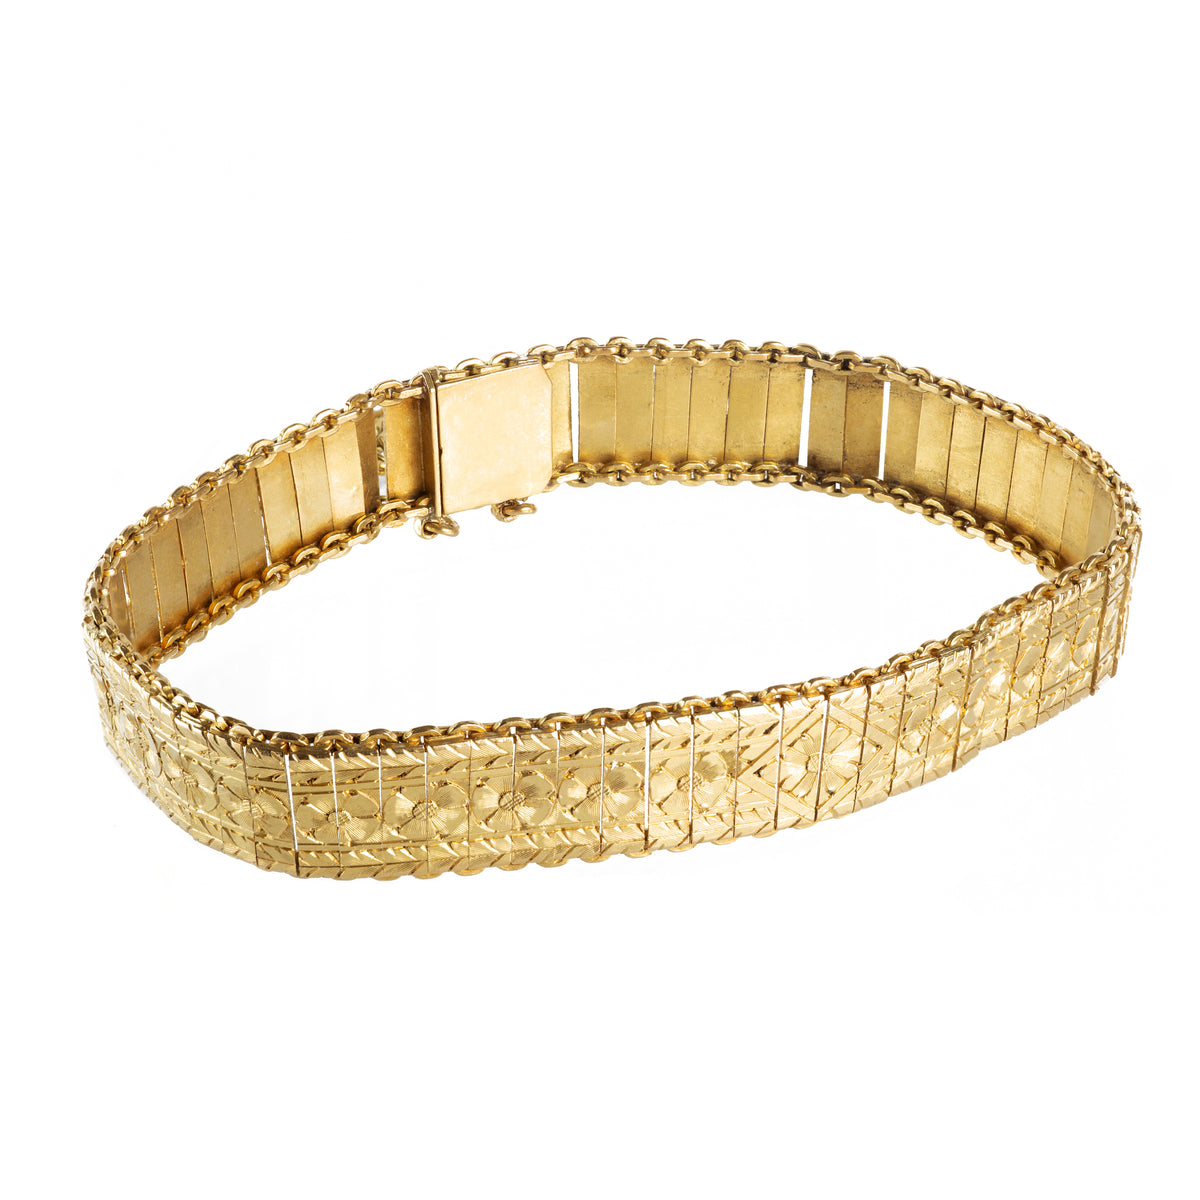 A French Antique Gold Bracelet